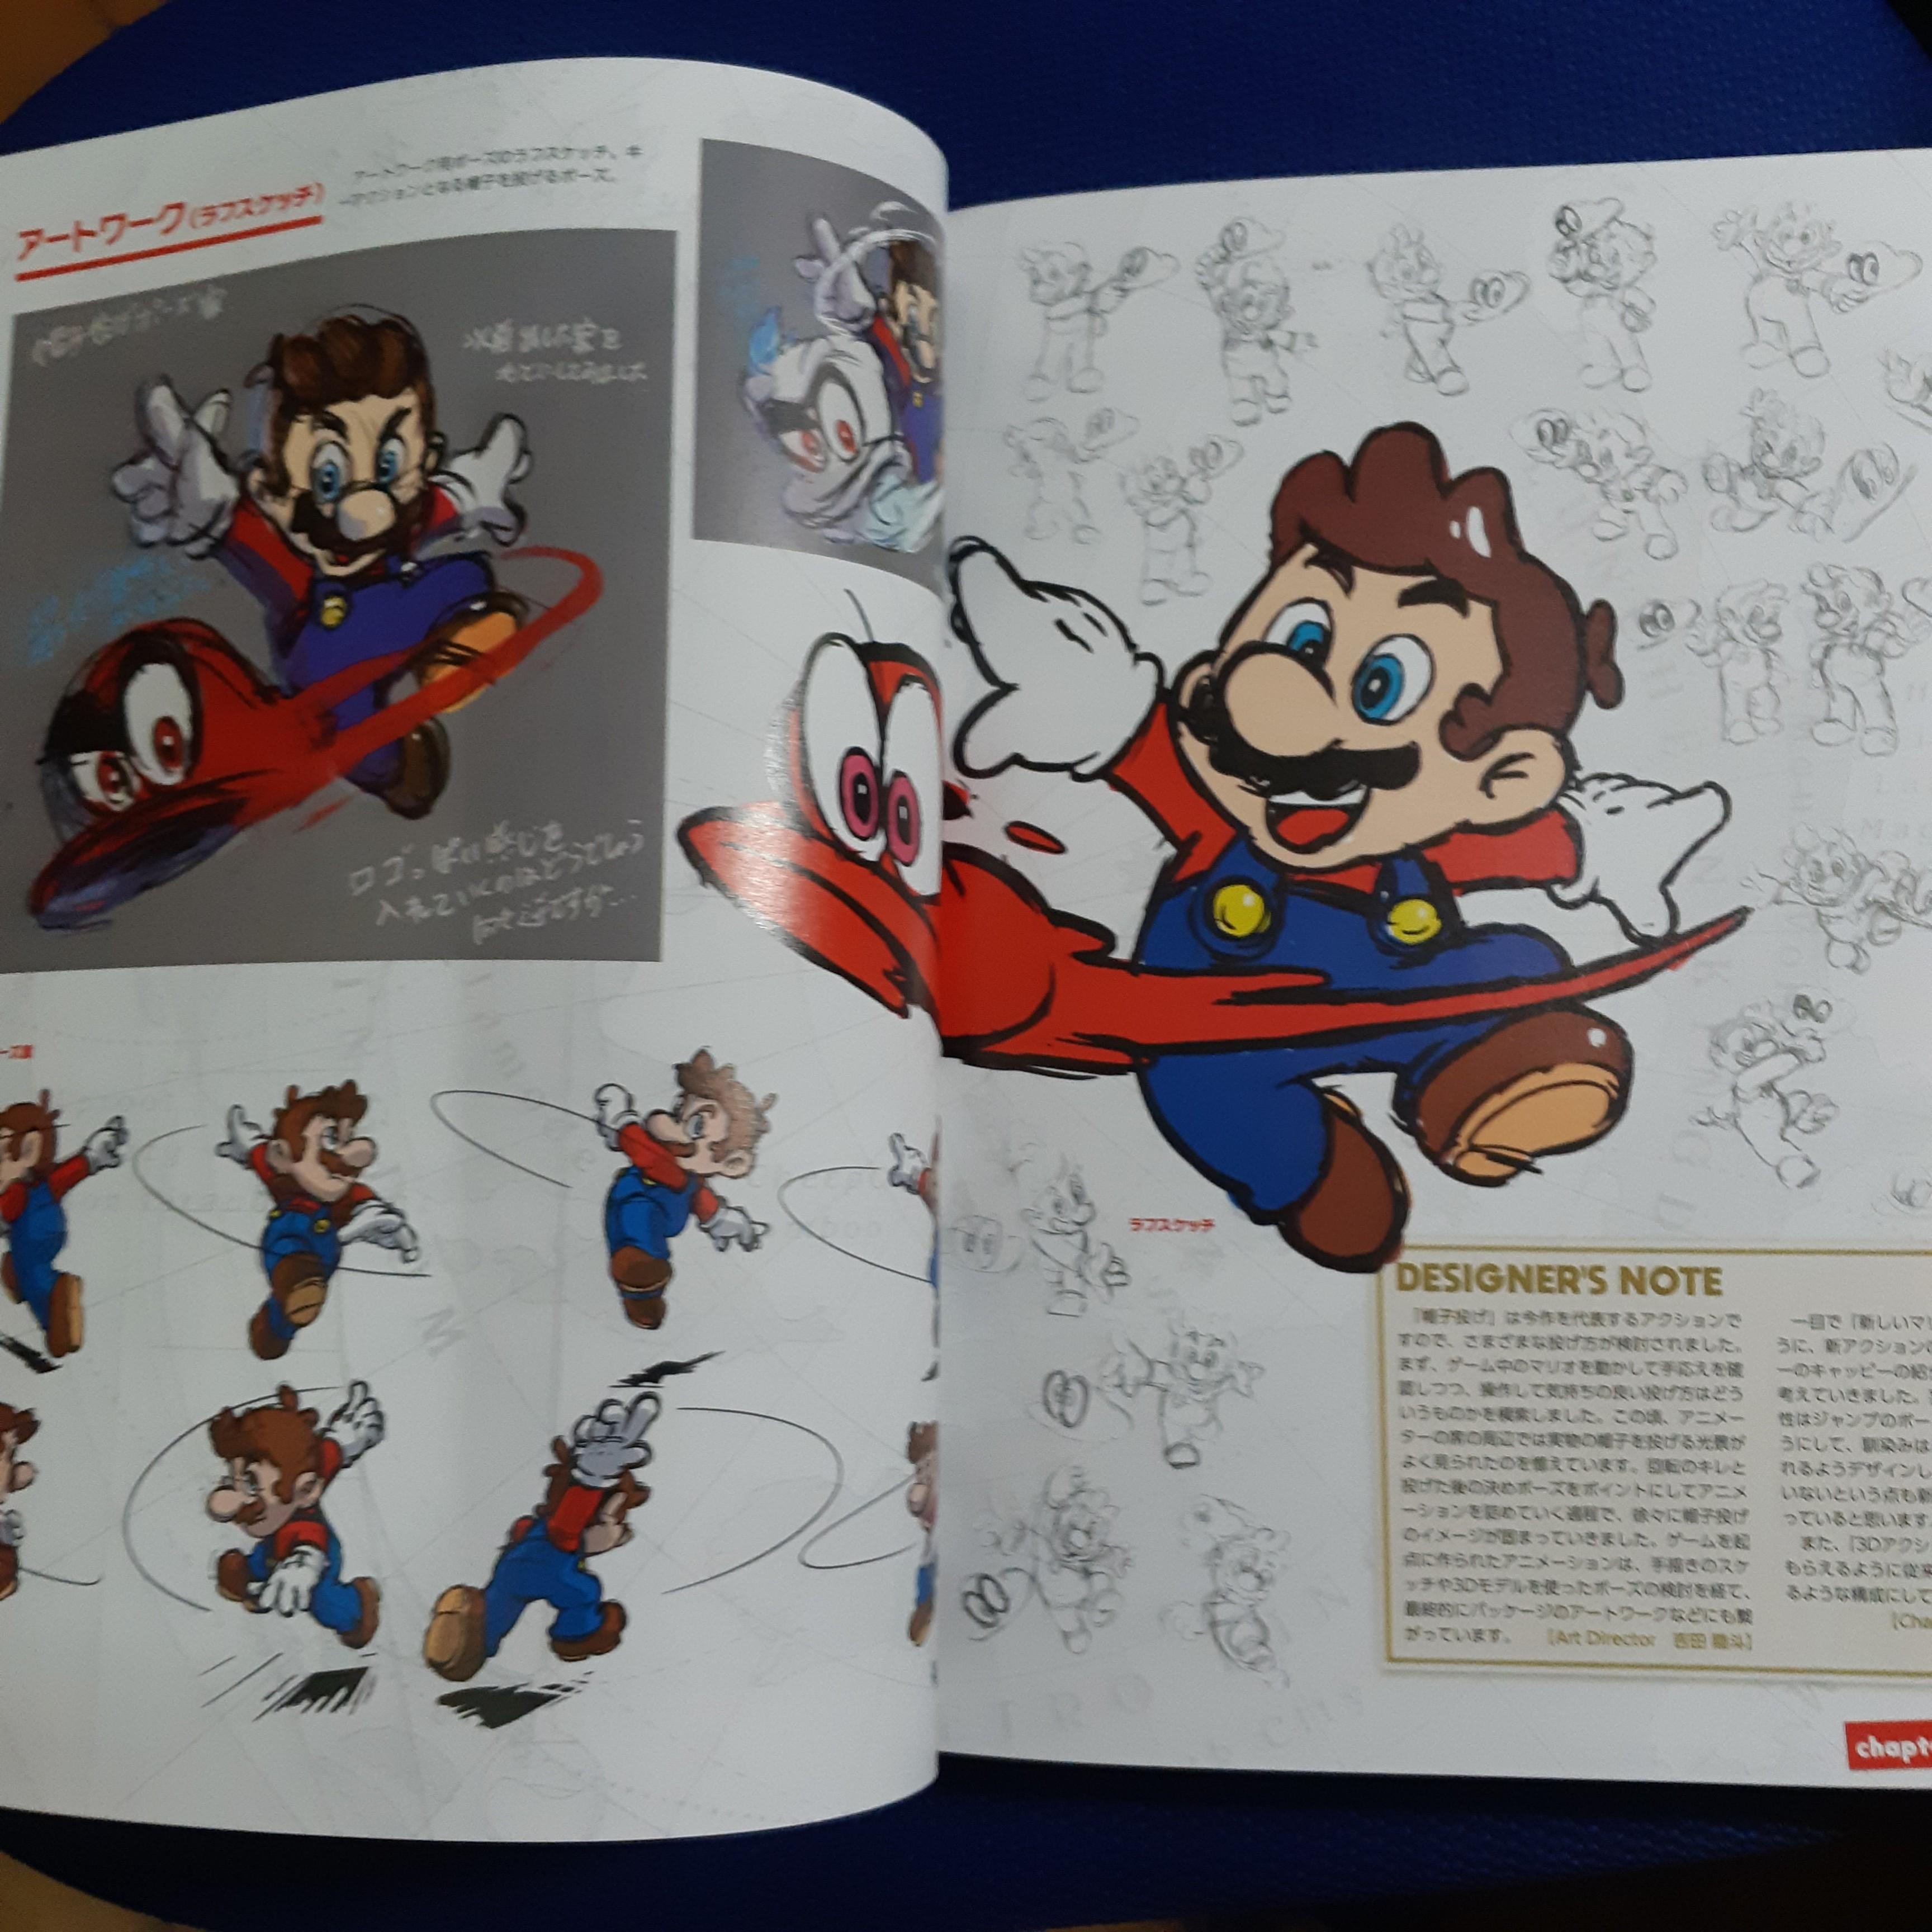 日本版The Art of Super Mario Odyssey 公式設定資料集, 興趣及遊戲